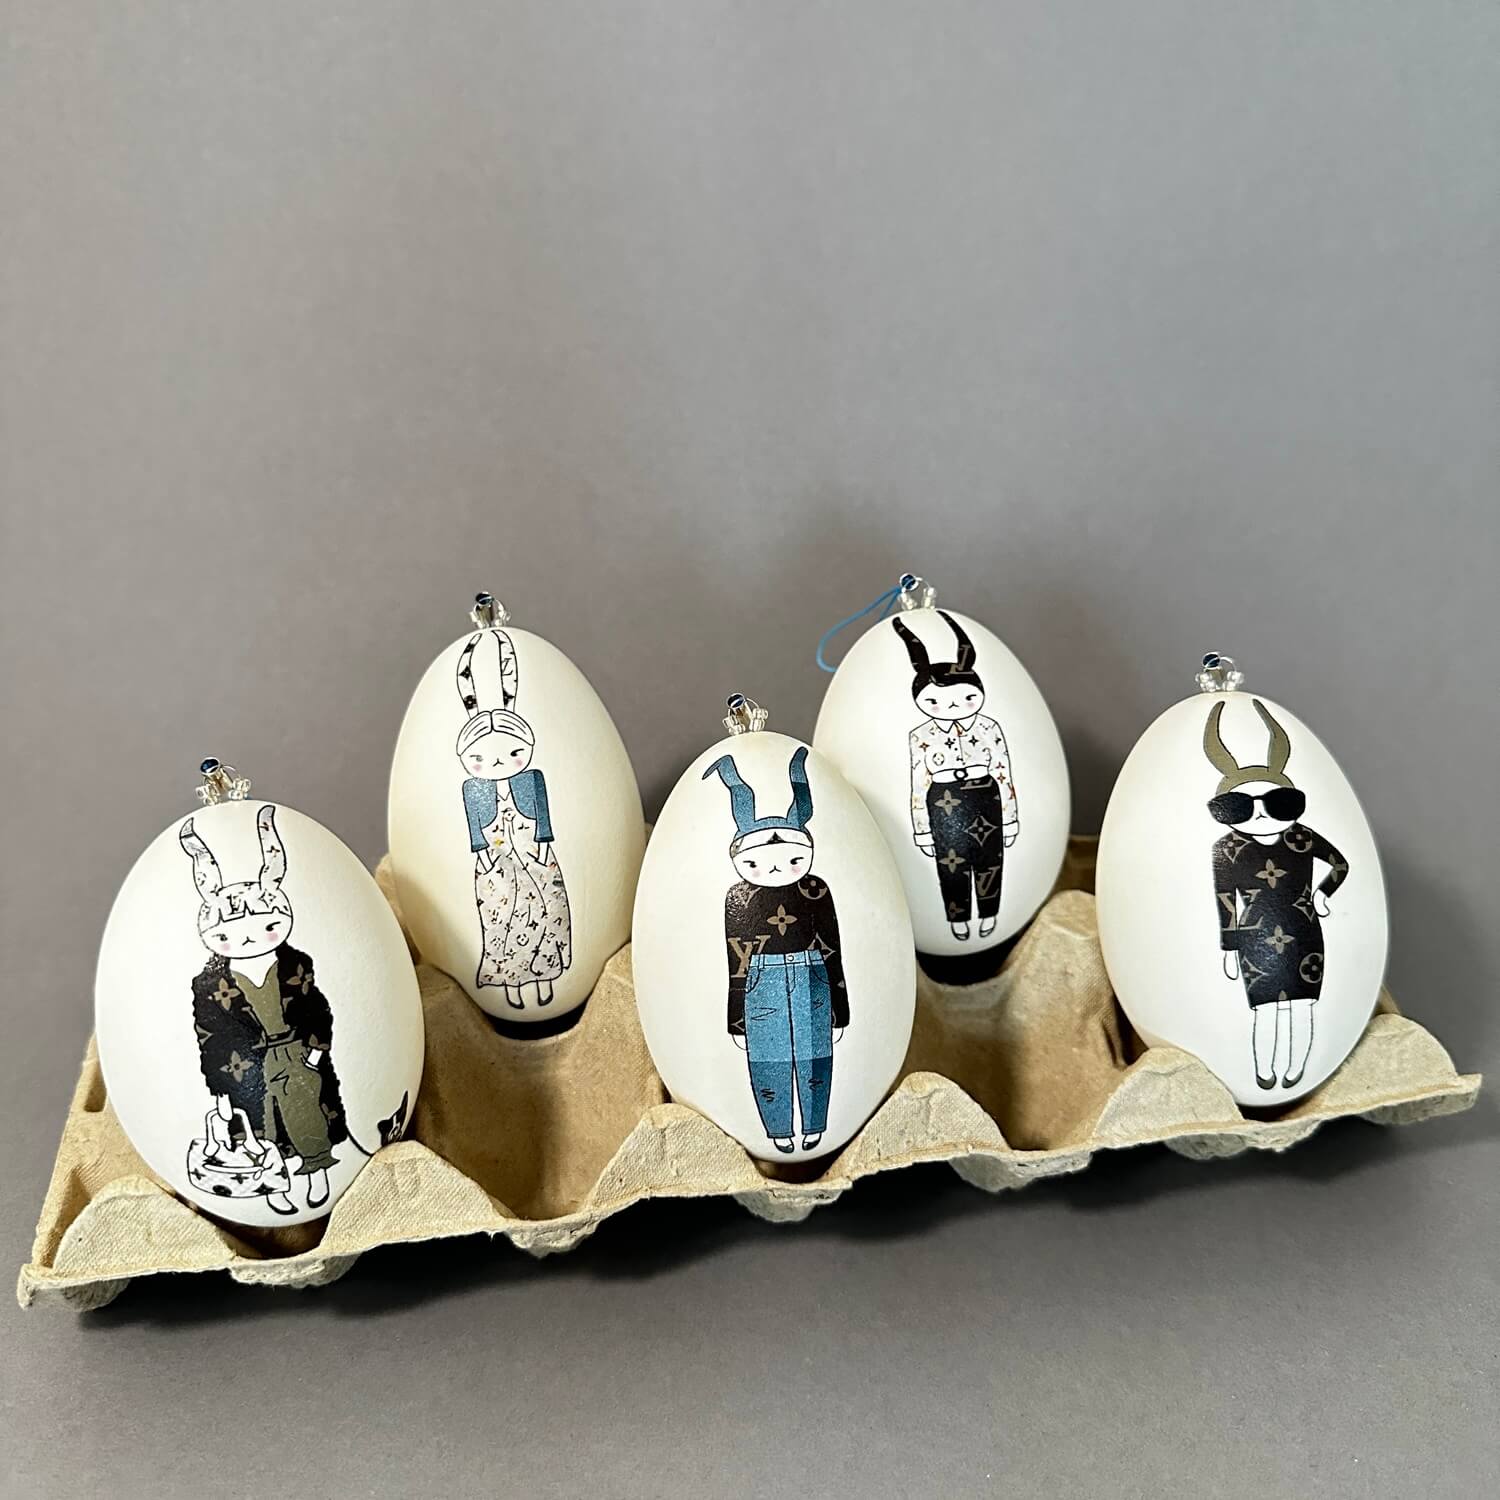 Lou.ei, denim: set of 5 goose eggs/Easter eggs including hanging